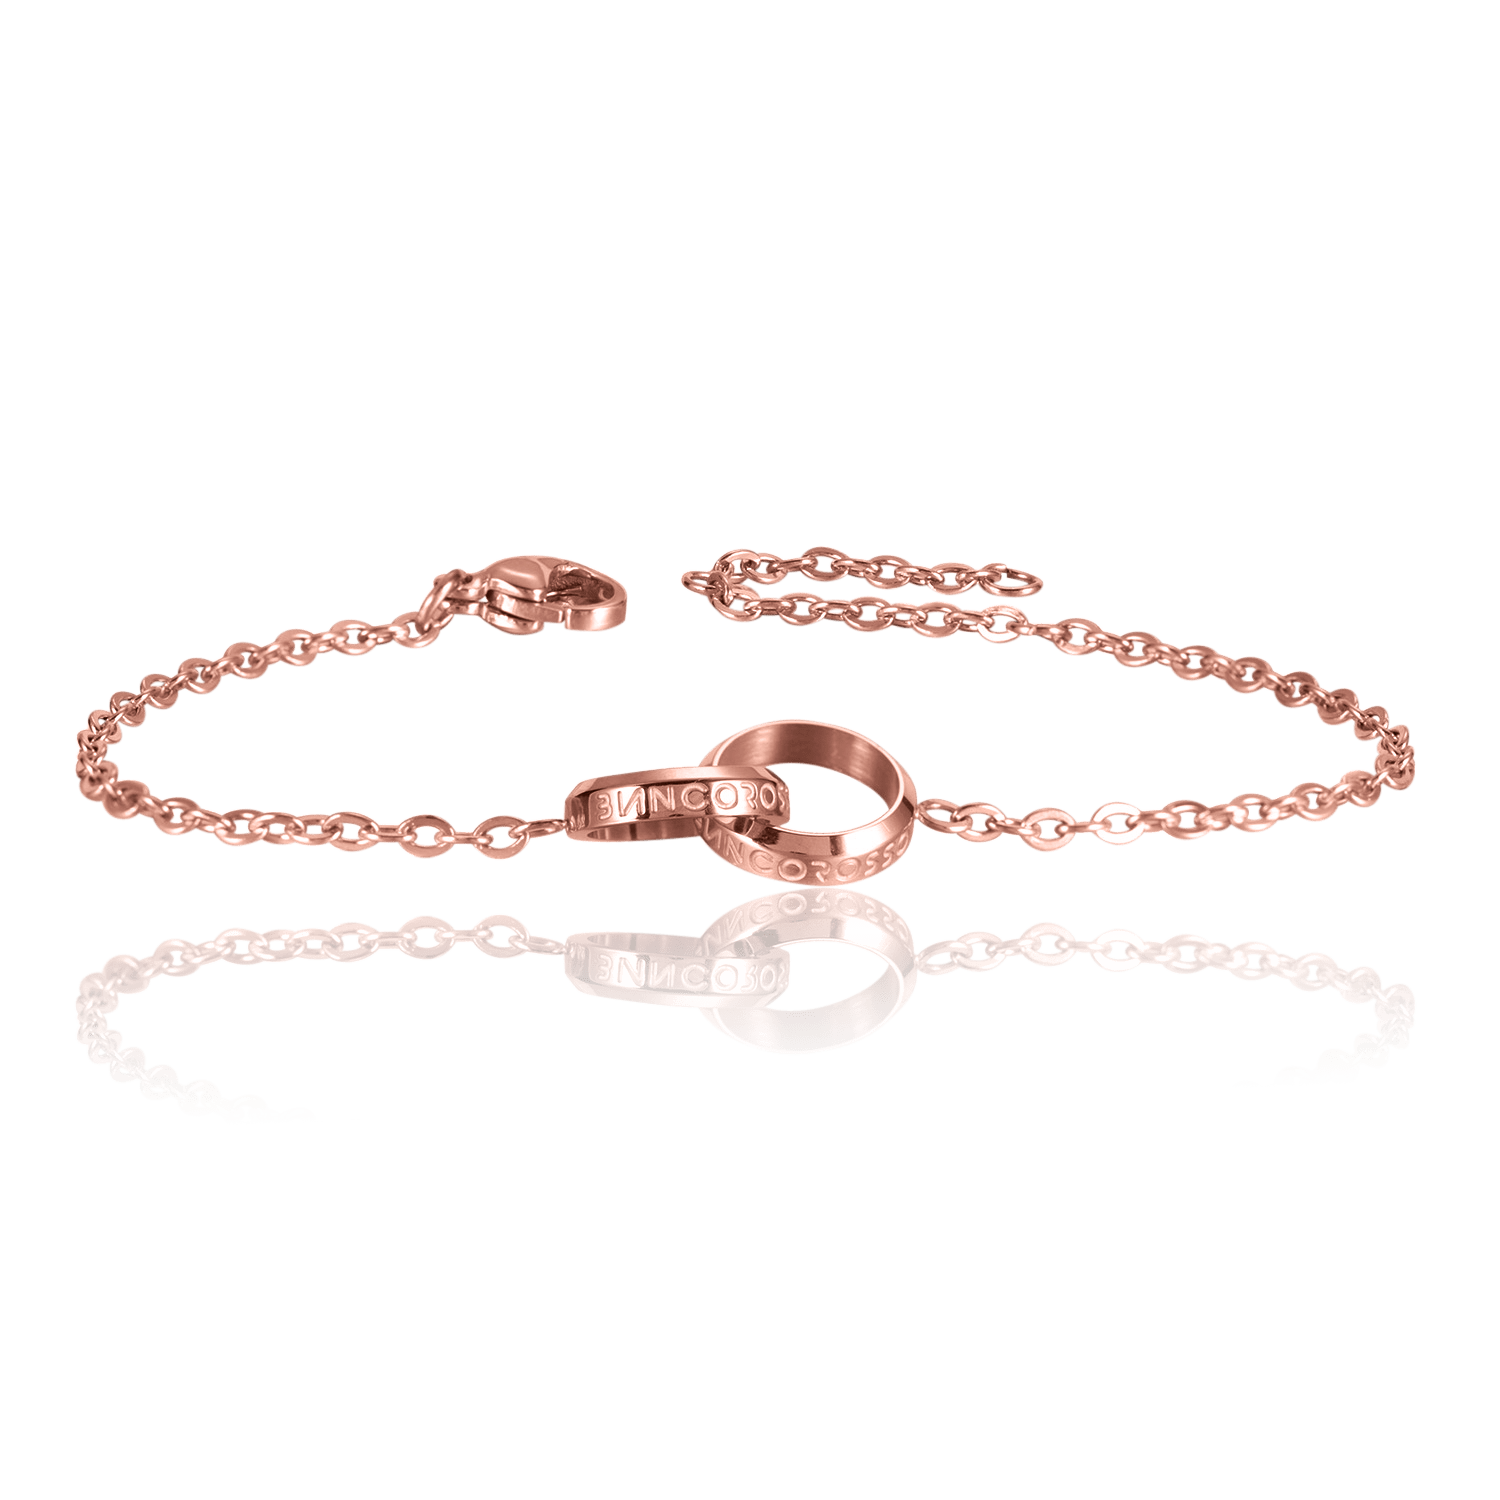 bianco rosso Bracelets For Your Graduation - Eternity Bracelet cyprus greece jewelry gift free shipping europe worldwide